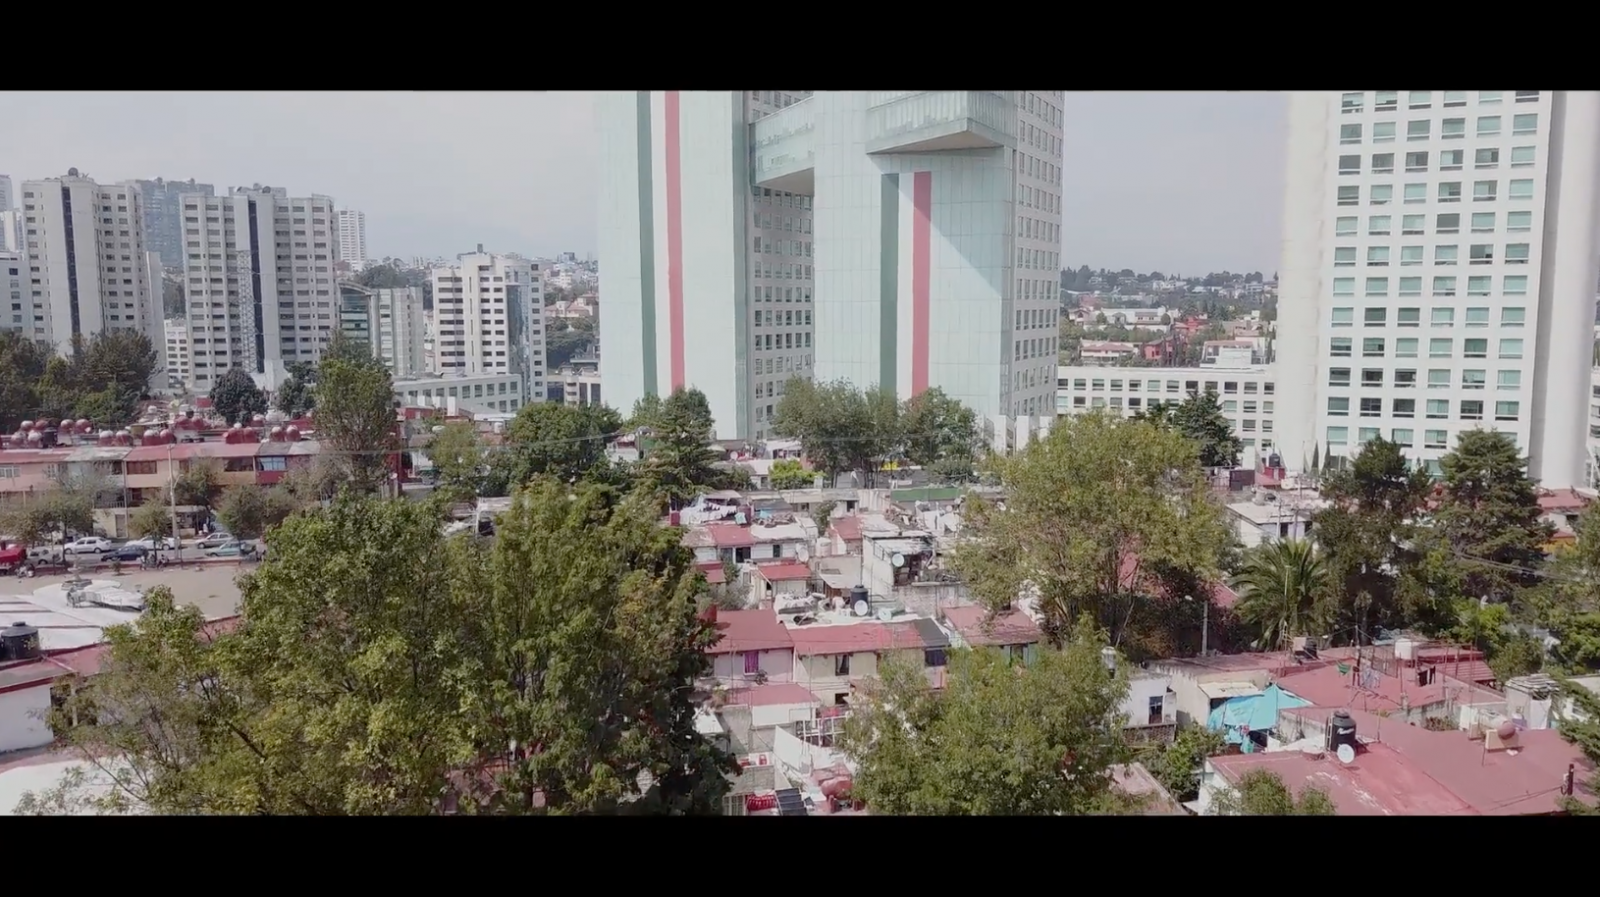 *ALL VIDEOS* - Mexico. The Battle of Palo Alto